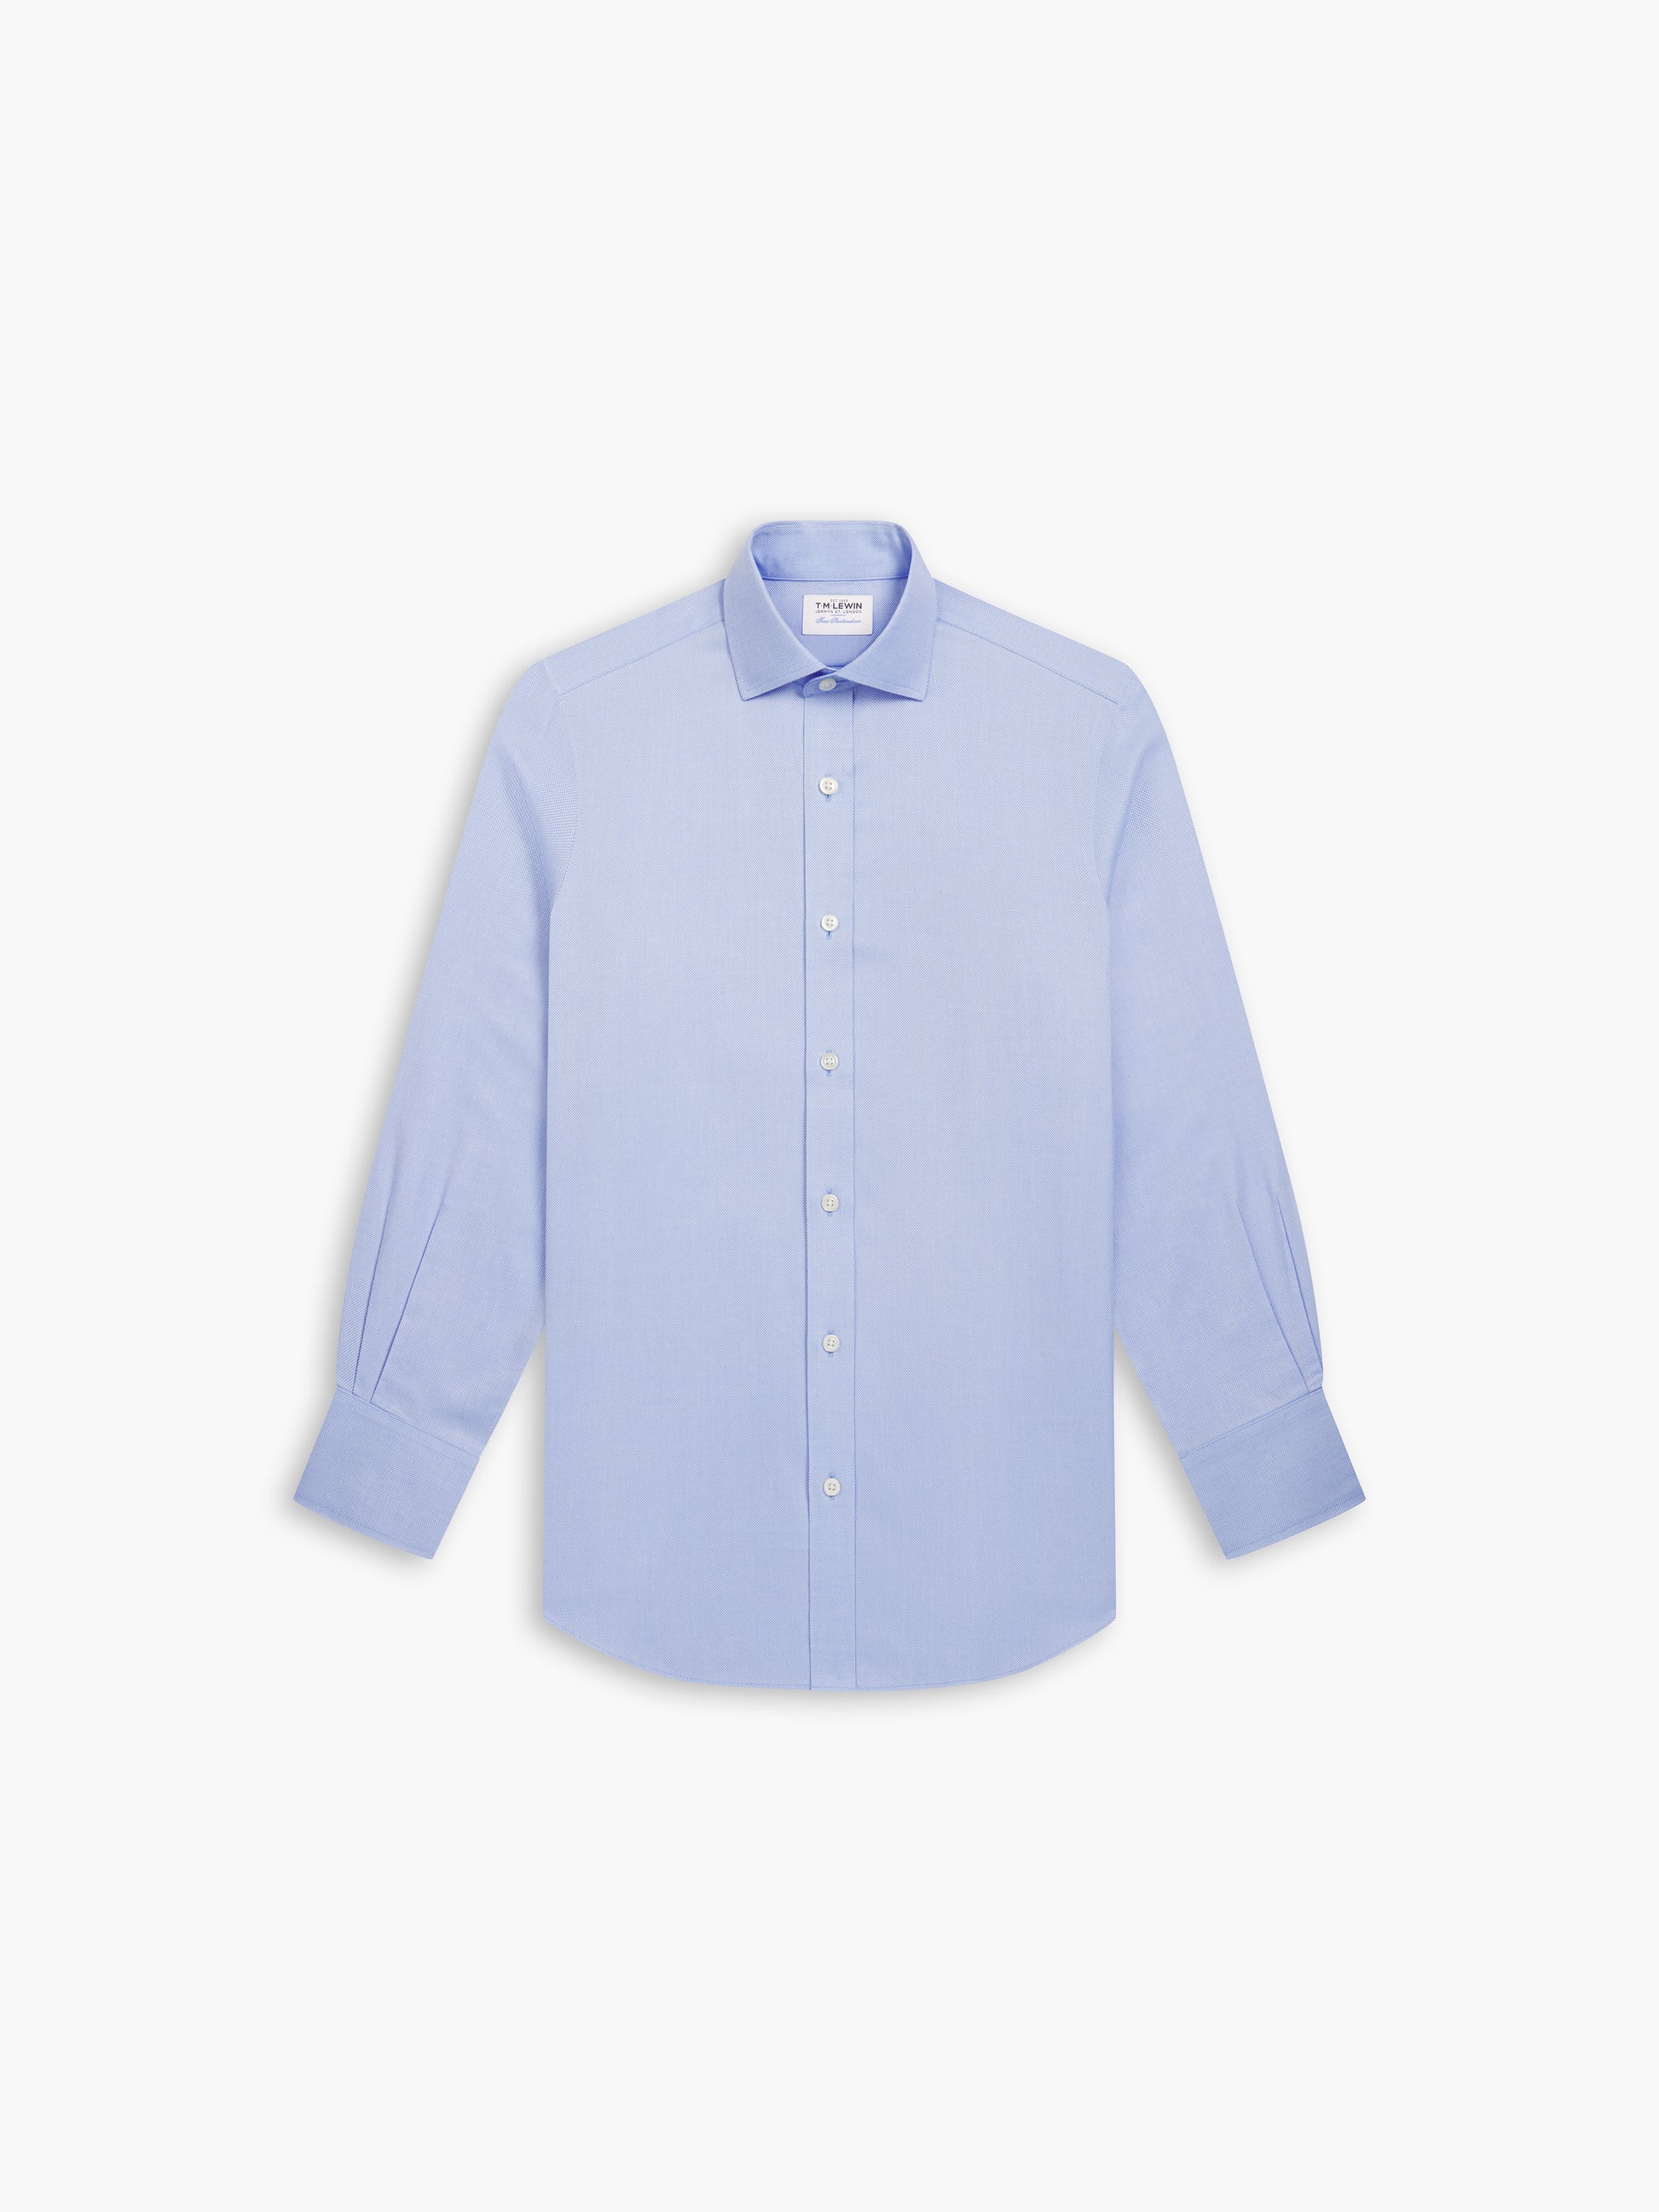 Image 2 of Non-Iron Blue Plain Royal Oxford Slim Fit Single Cuff Classic Collar Shirt